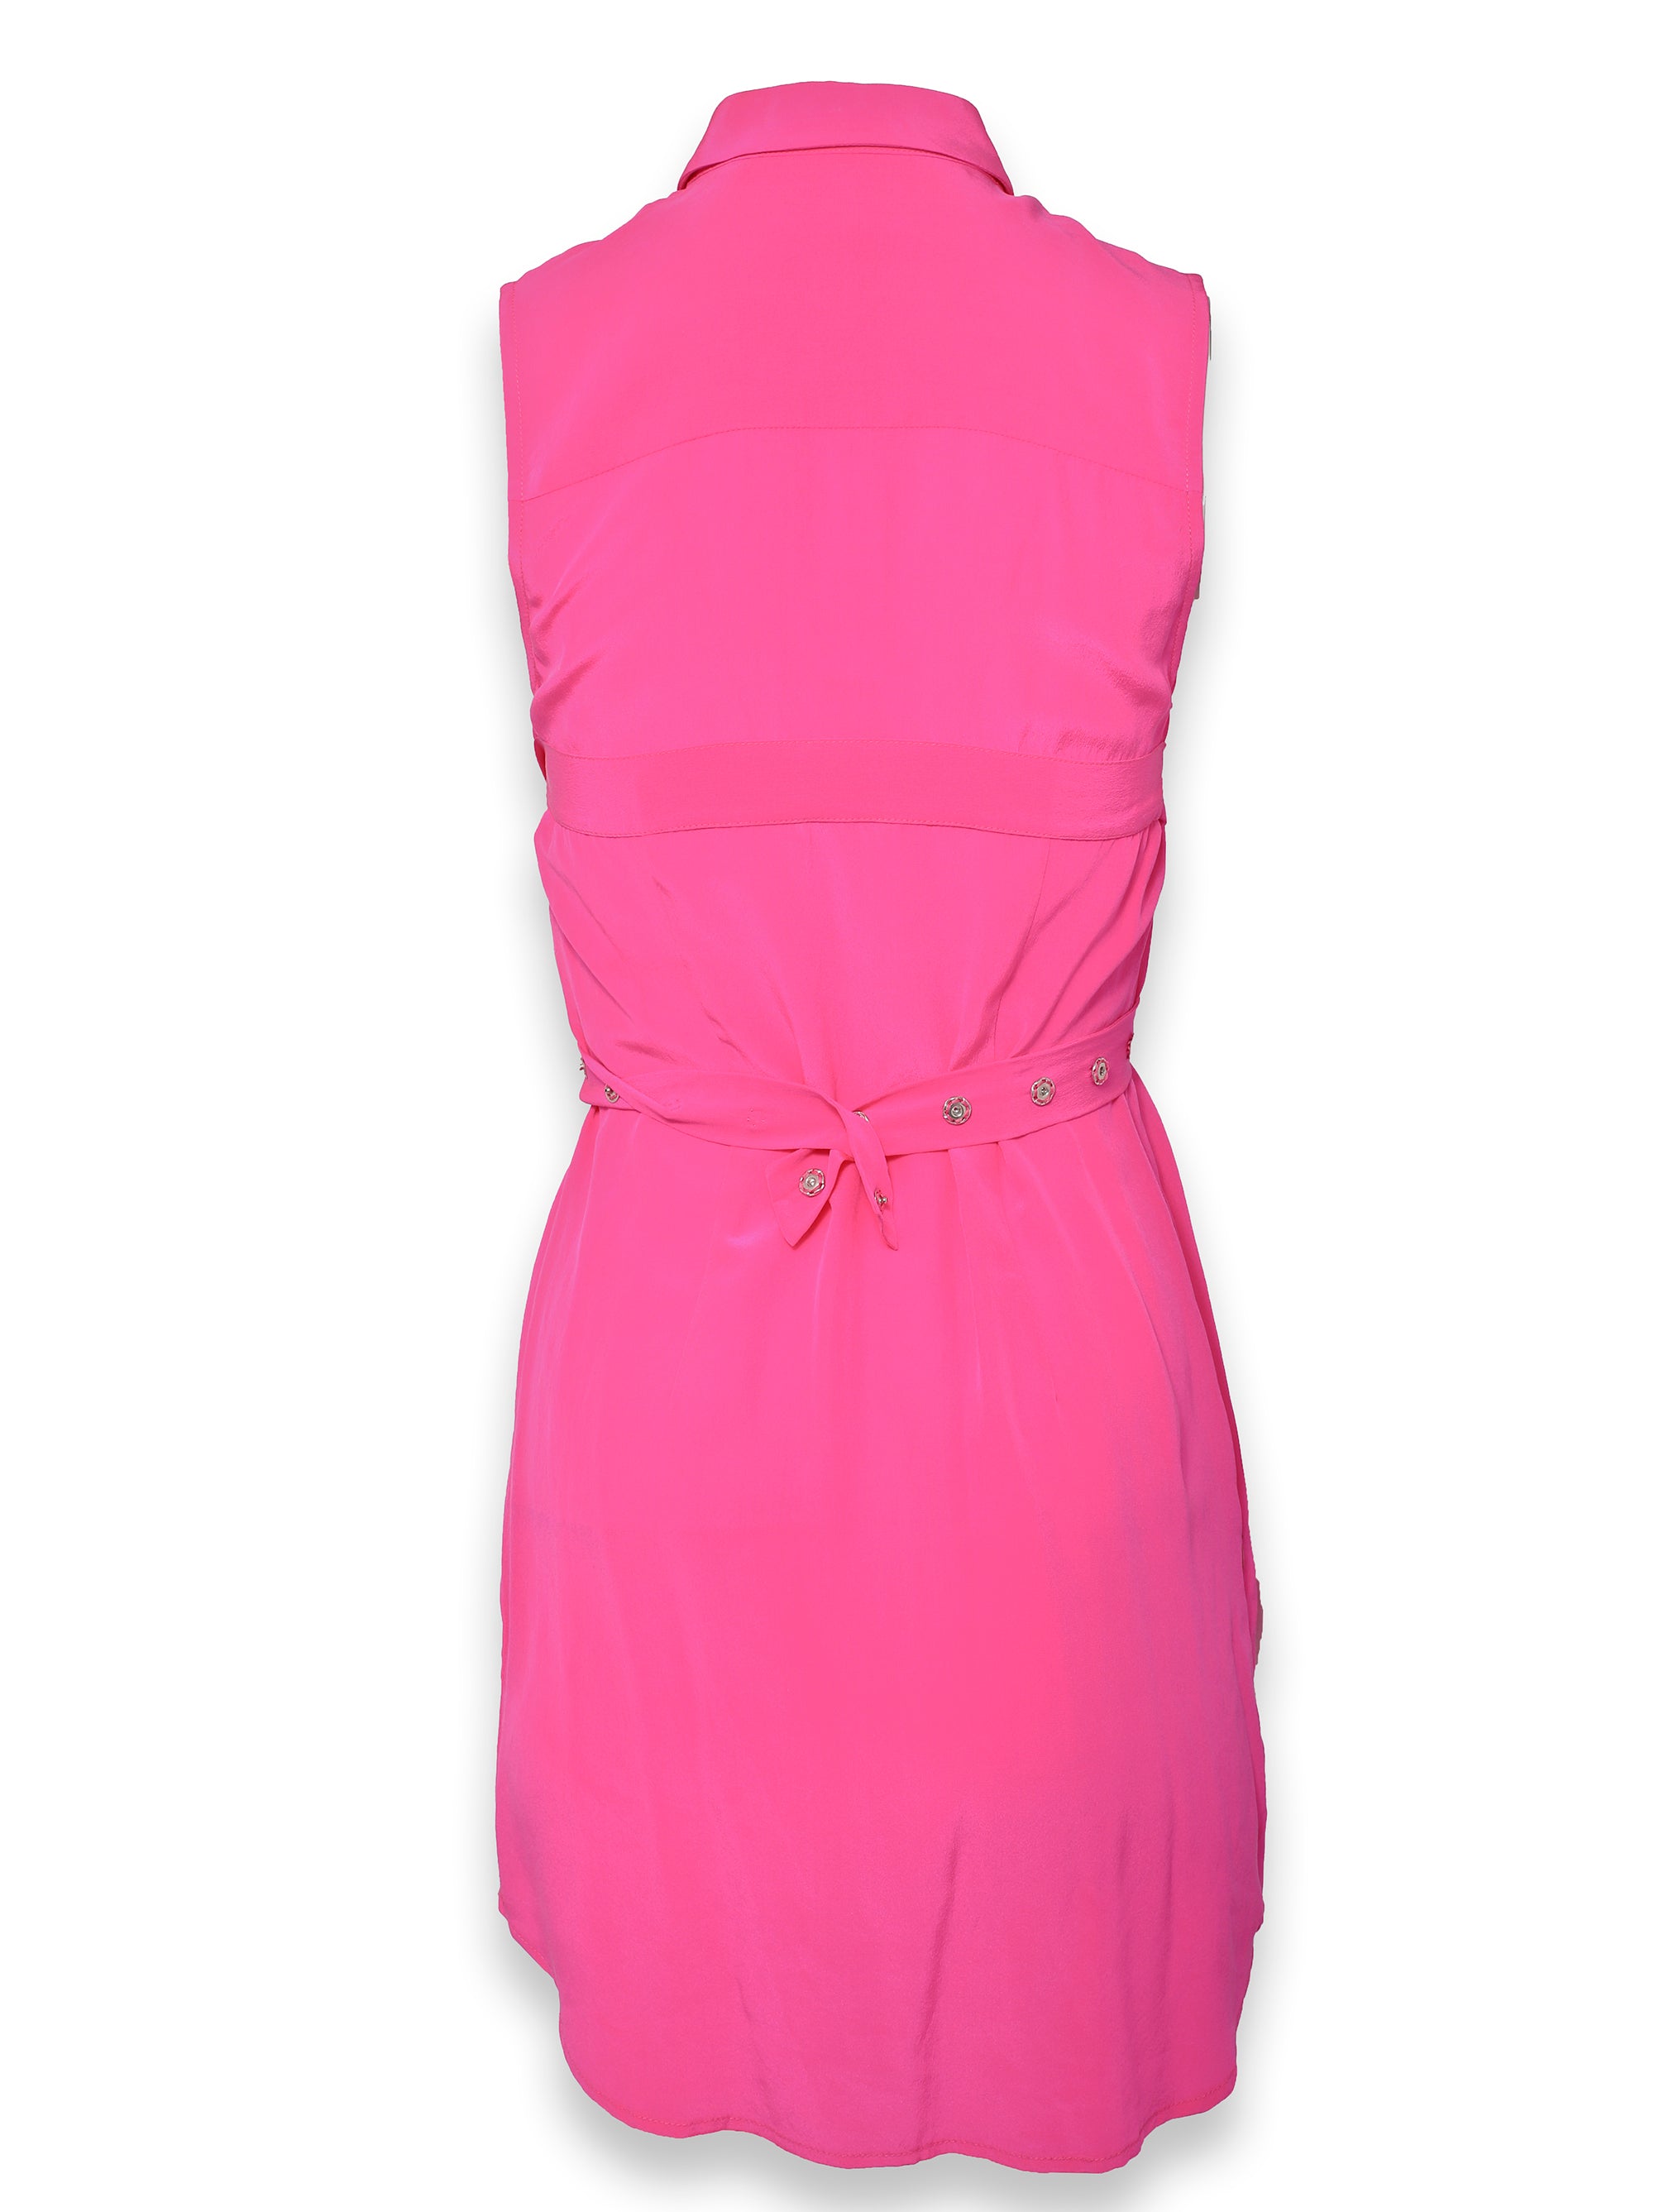 Hot Pink Sleeveless Dress